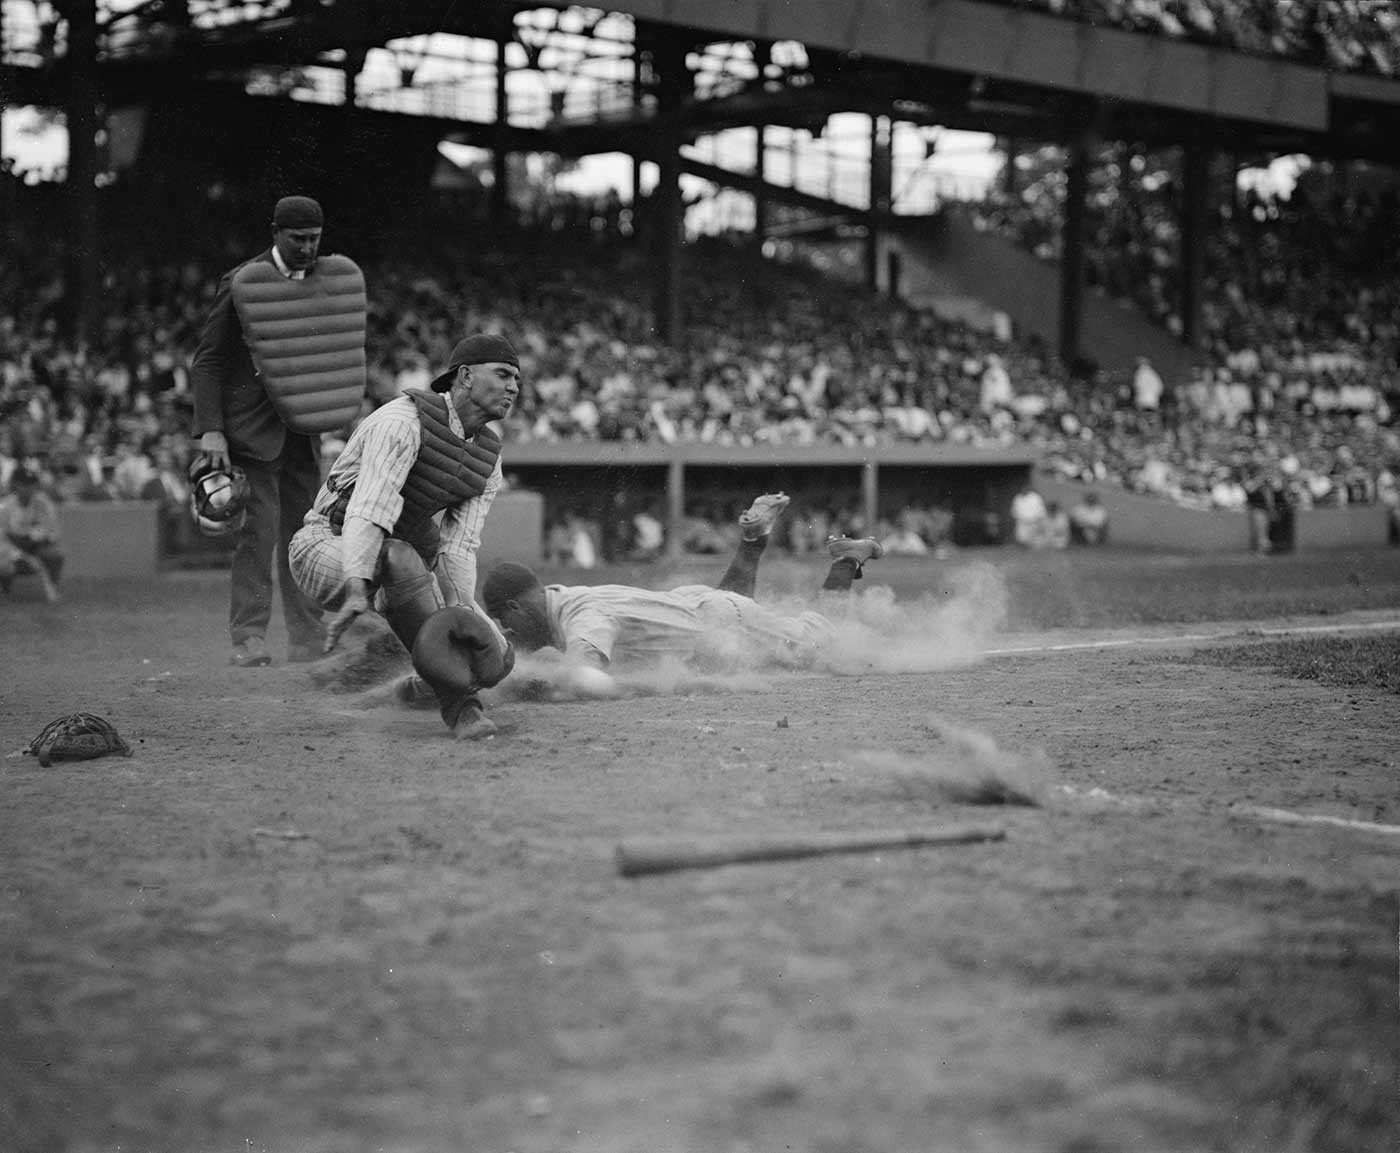 Yankees' Lou Gehrig scores head first in the 4th inning as Joe Harris' throw gets away from catcher Hank Severeid of Senators. Circa 1925.